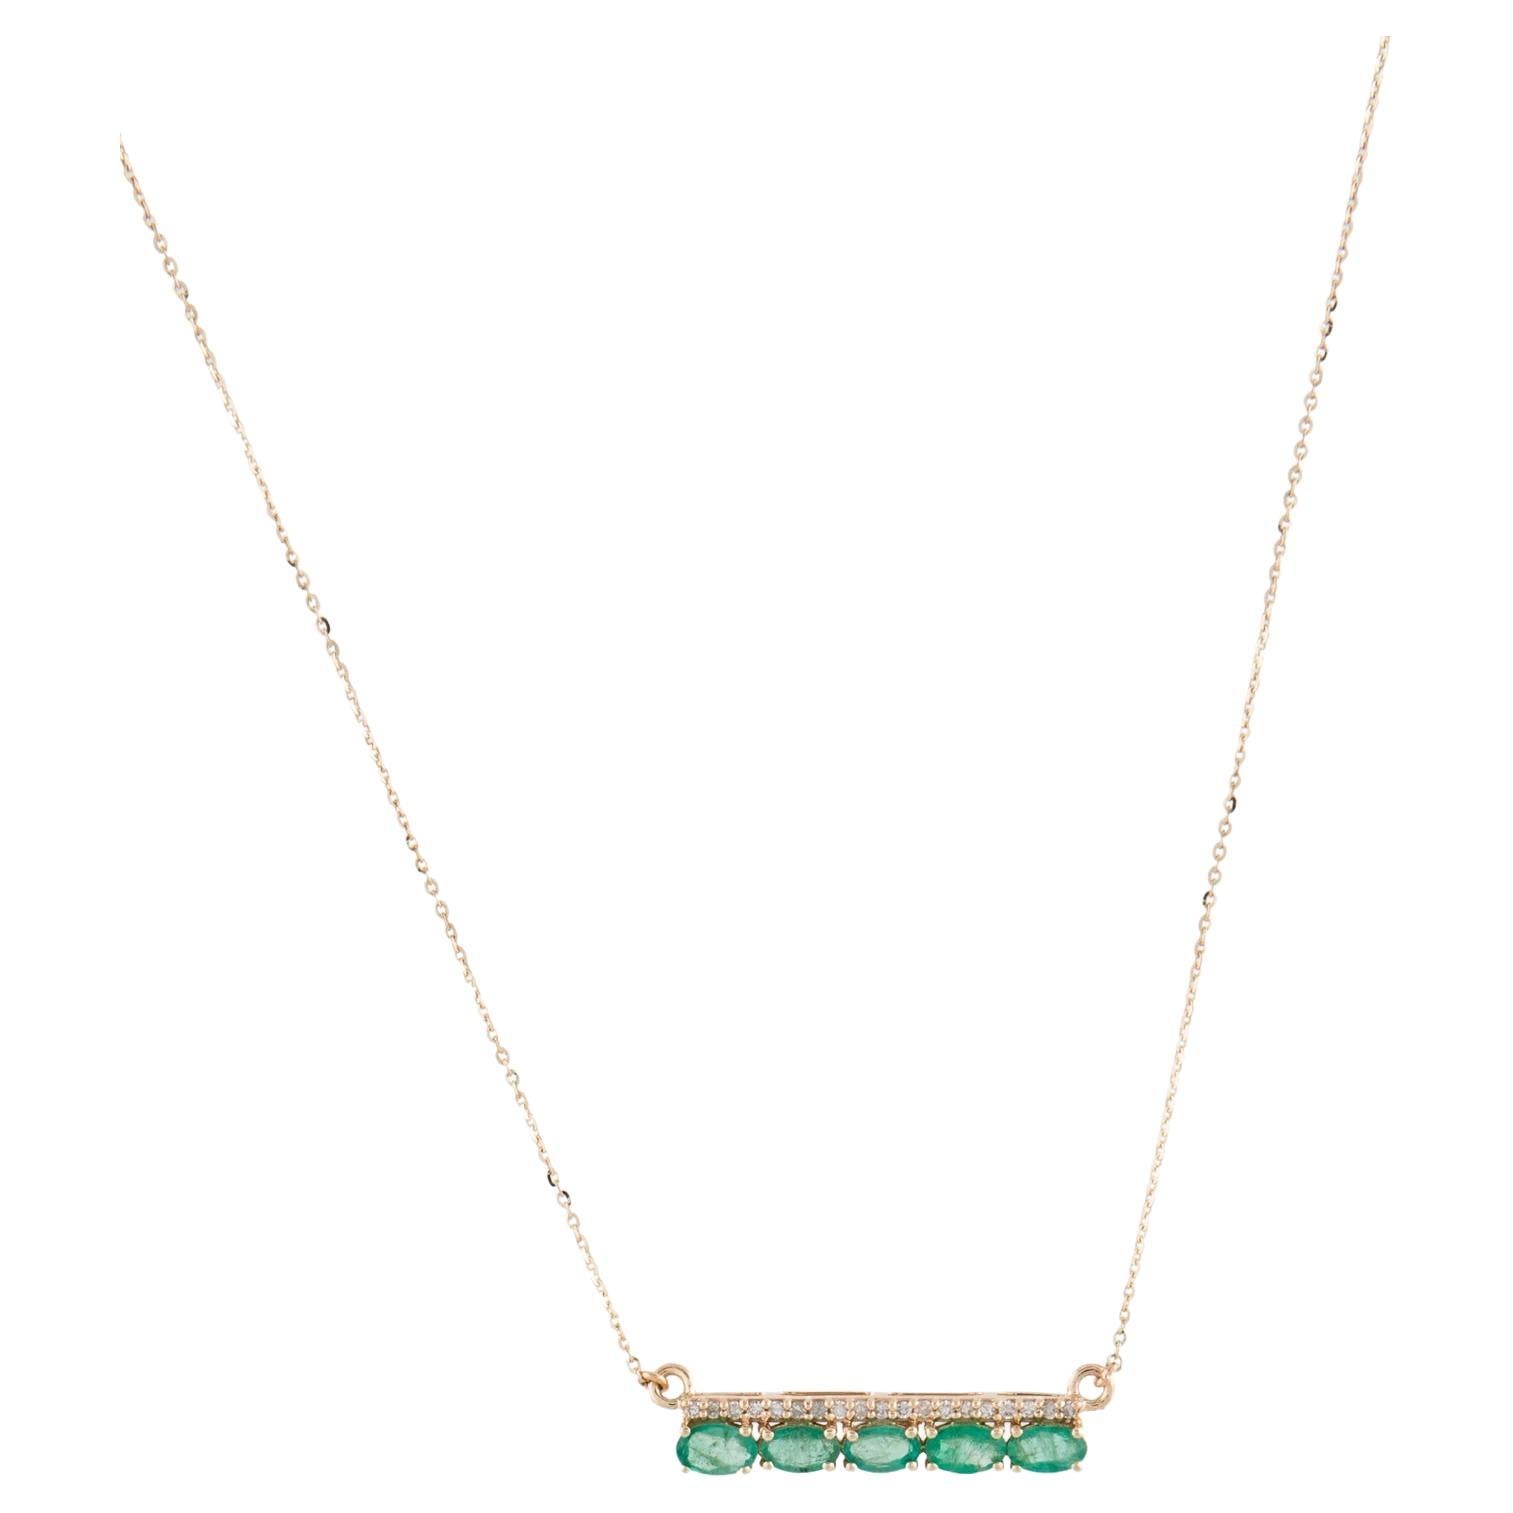 14K 1.07ctw Emerald & Diamond Pendant Necklace: Exquisite Luxury Statement Piece For Sale